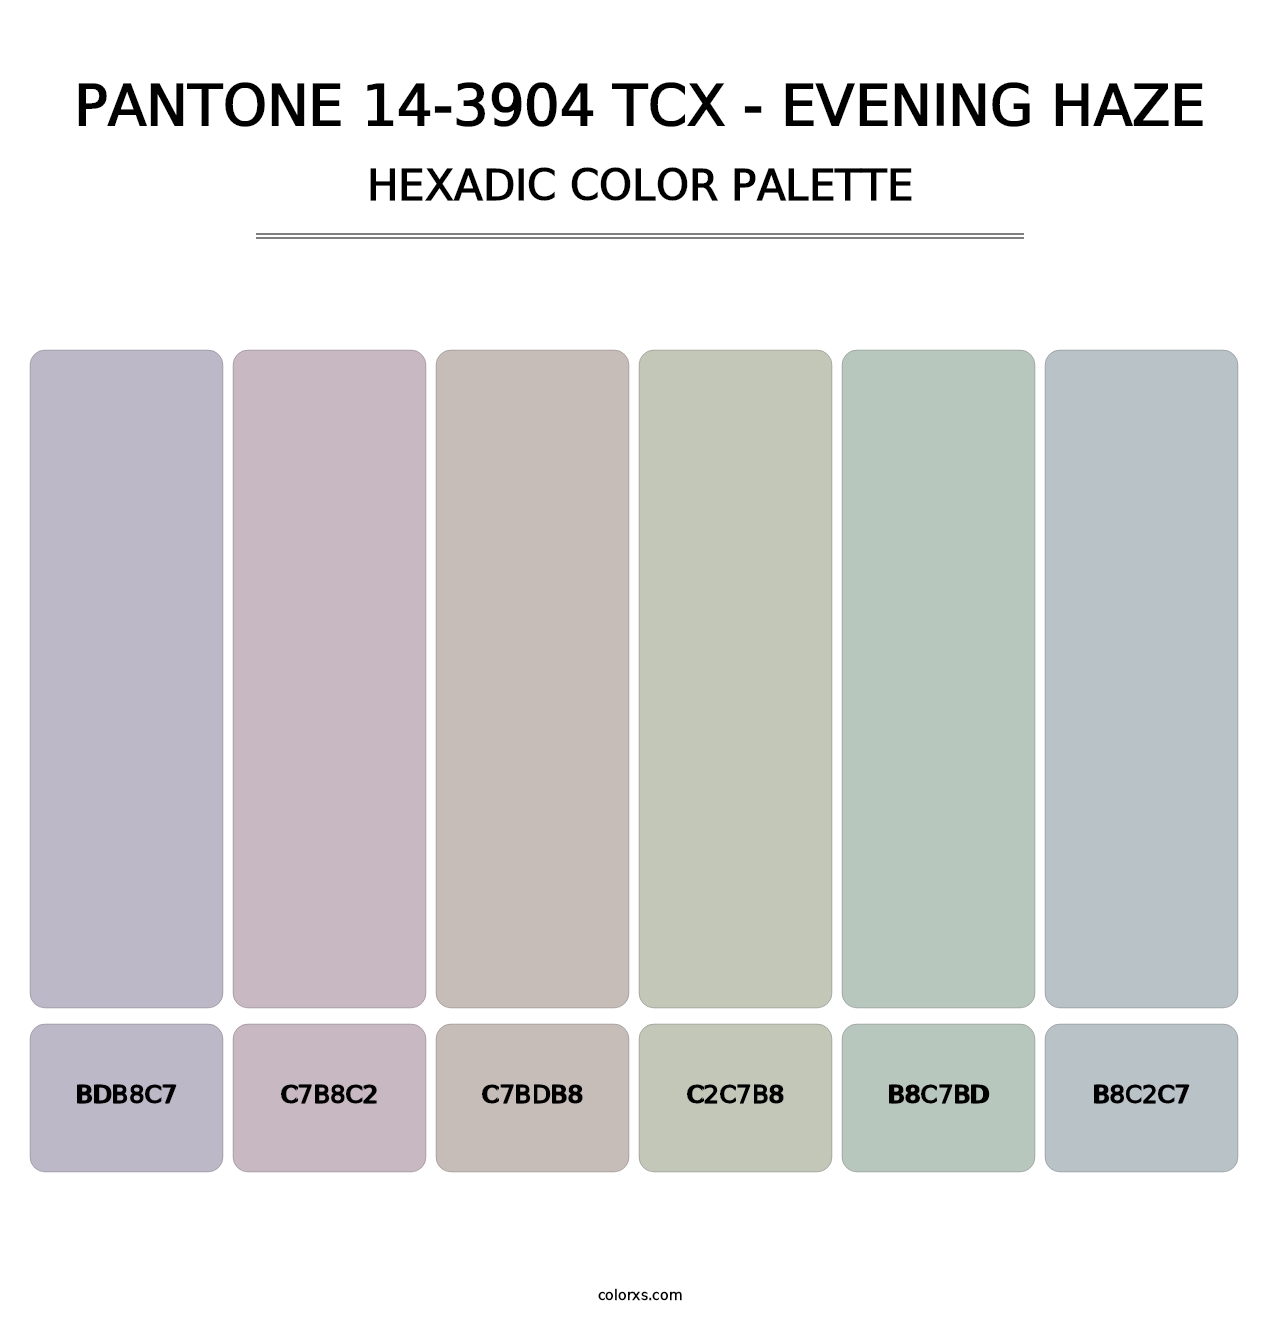 PANTONE 14-3904 TCX - Evening Haze - Hexadic Color Palette